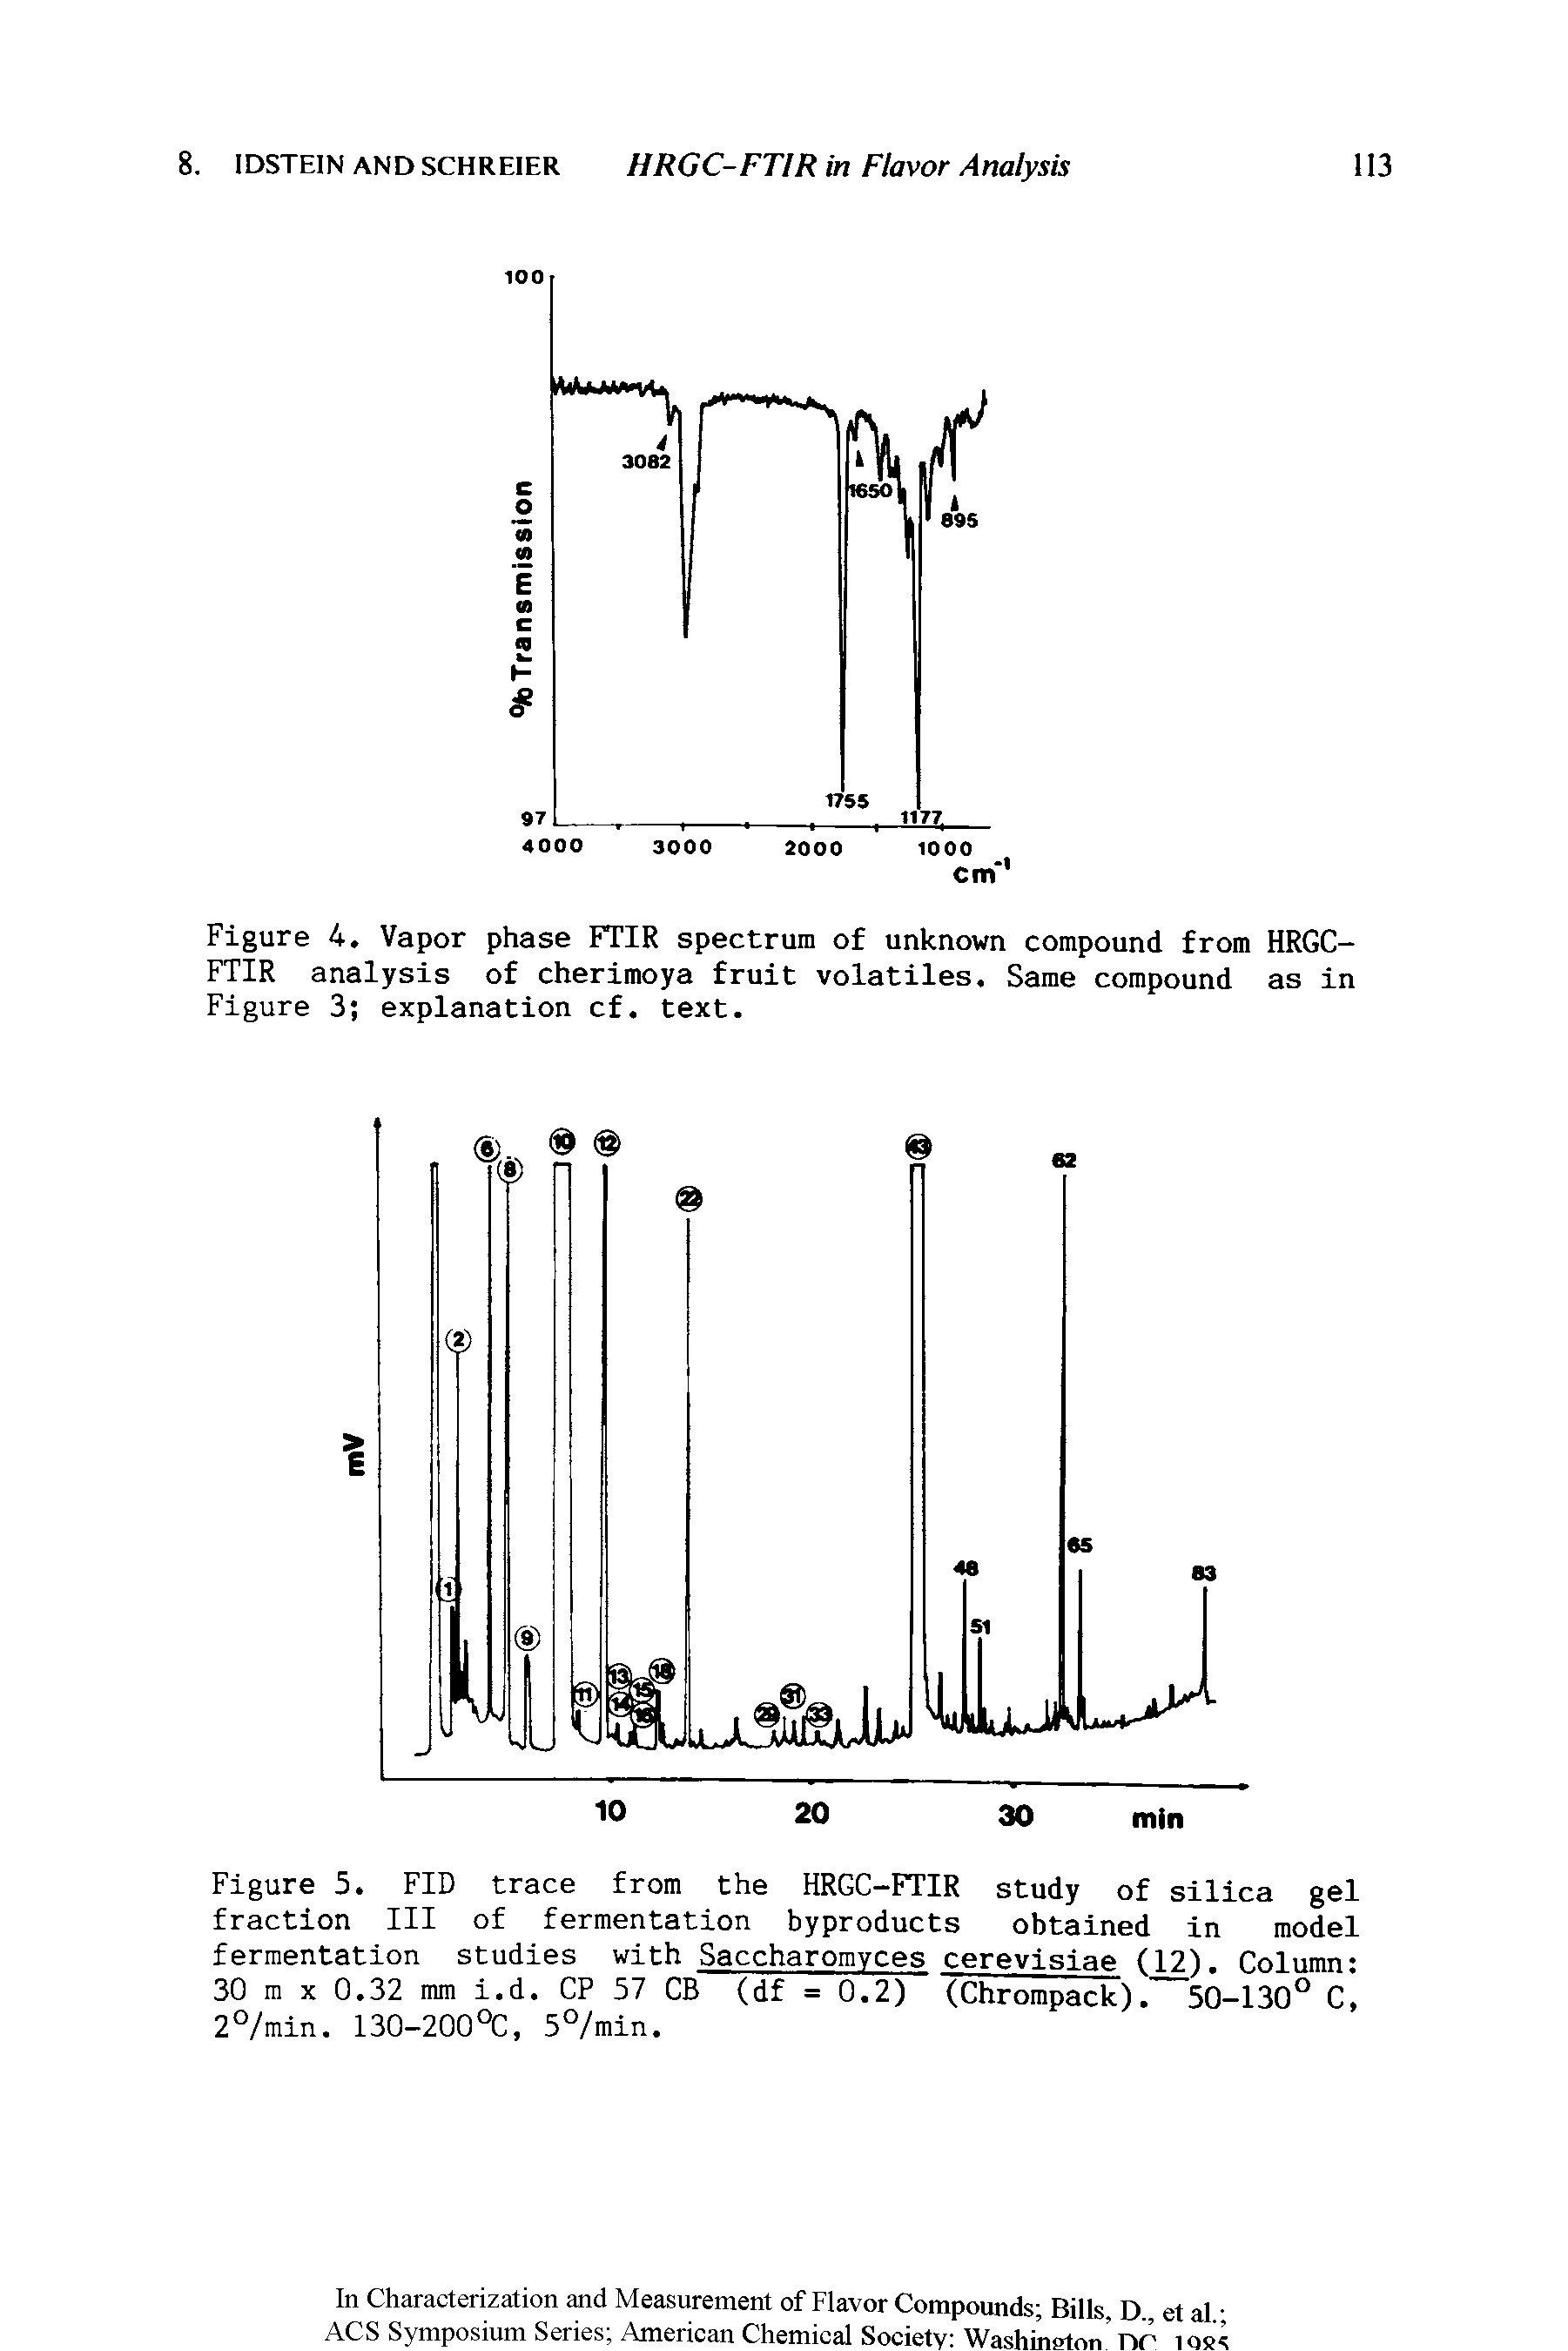 Figure 4. Vapor phase FTIR spectrum of unknown compound from HRGC-FTIR analysis of cherimoya fruit volatiles. Same compound as in Figure 3 explanation cf. text.